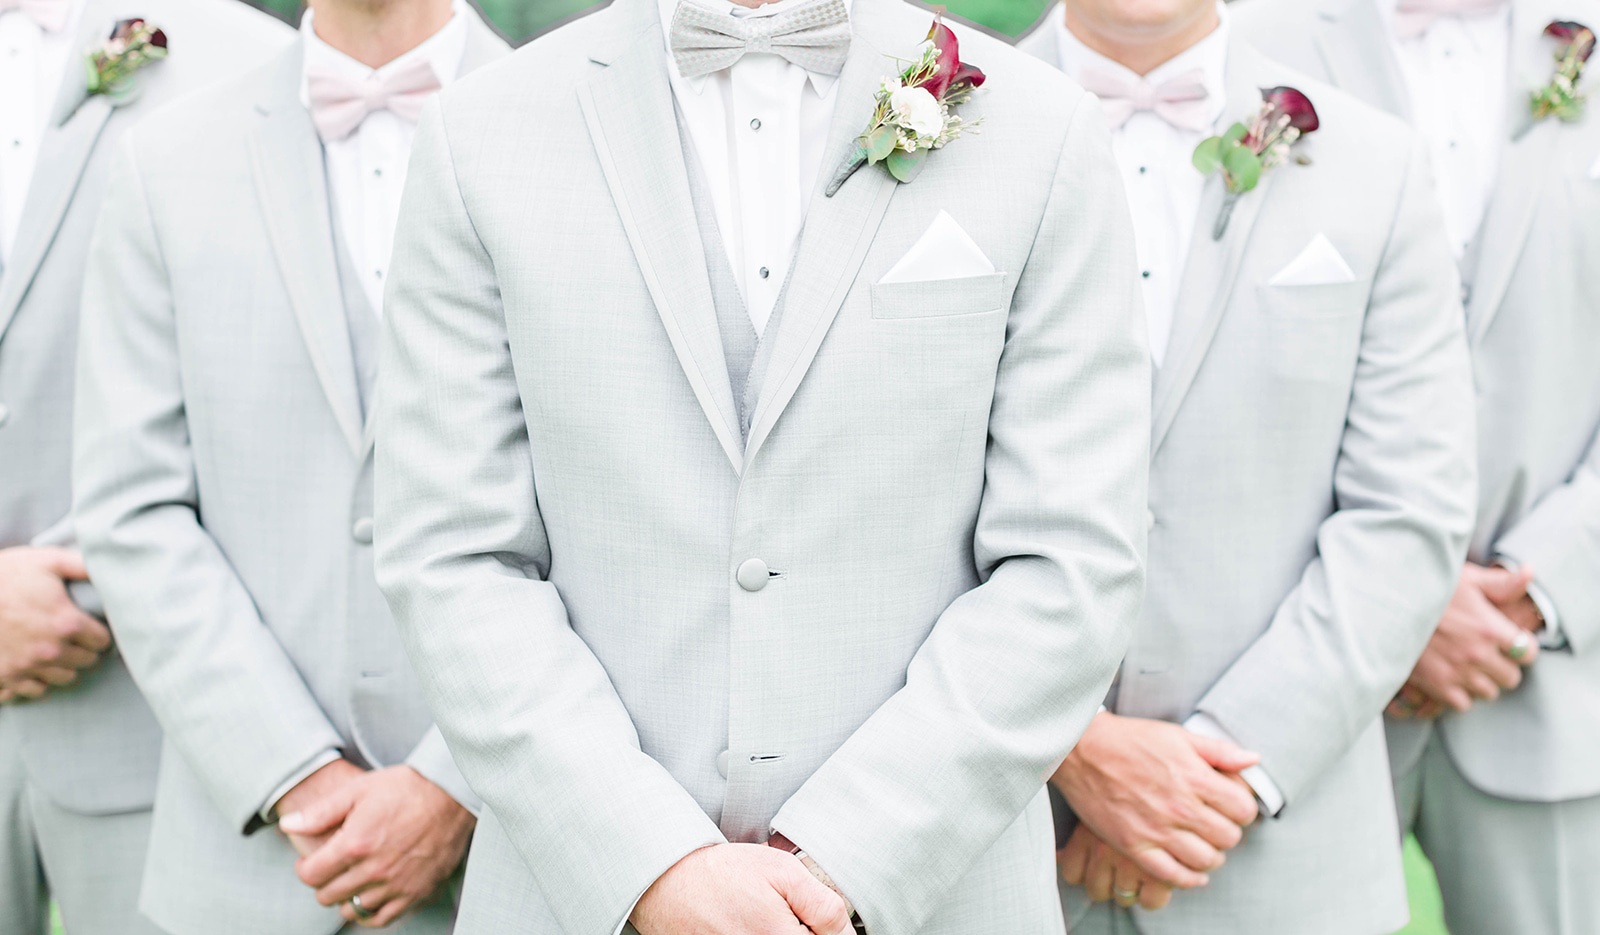 A Romantic Wausau Country Club Wisconsin Wedding - The Overwhelmed Bride Wedding Blog